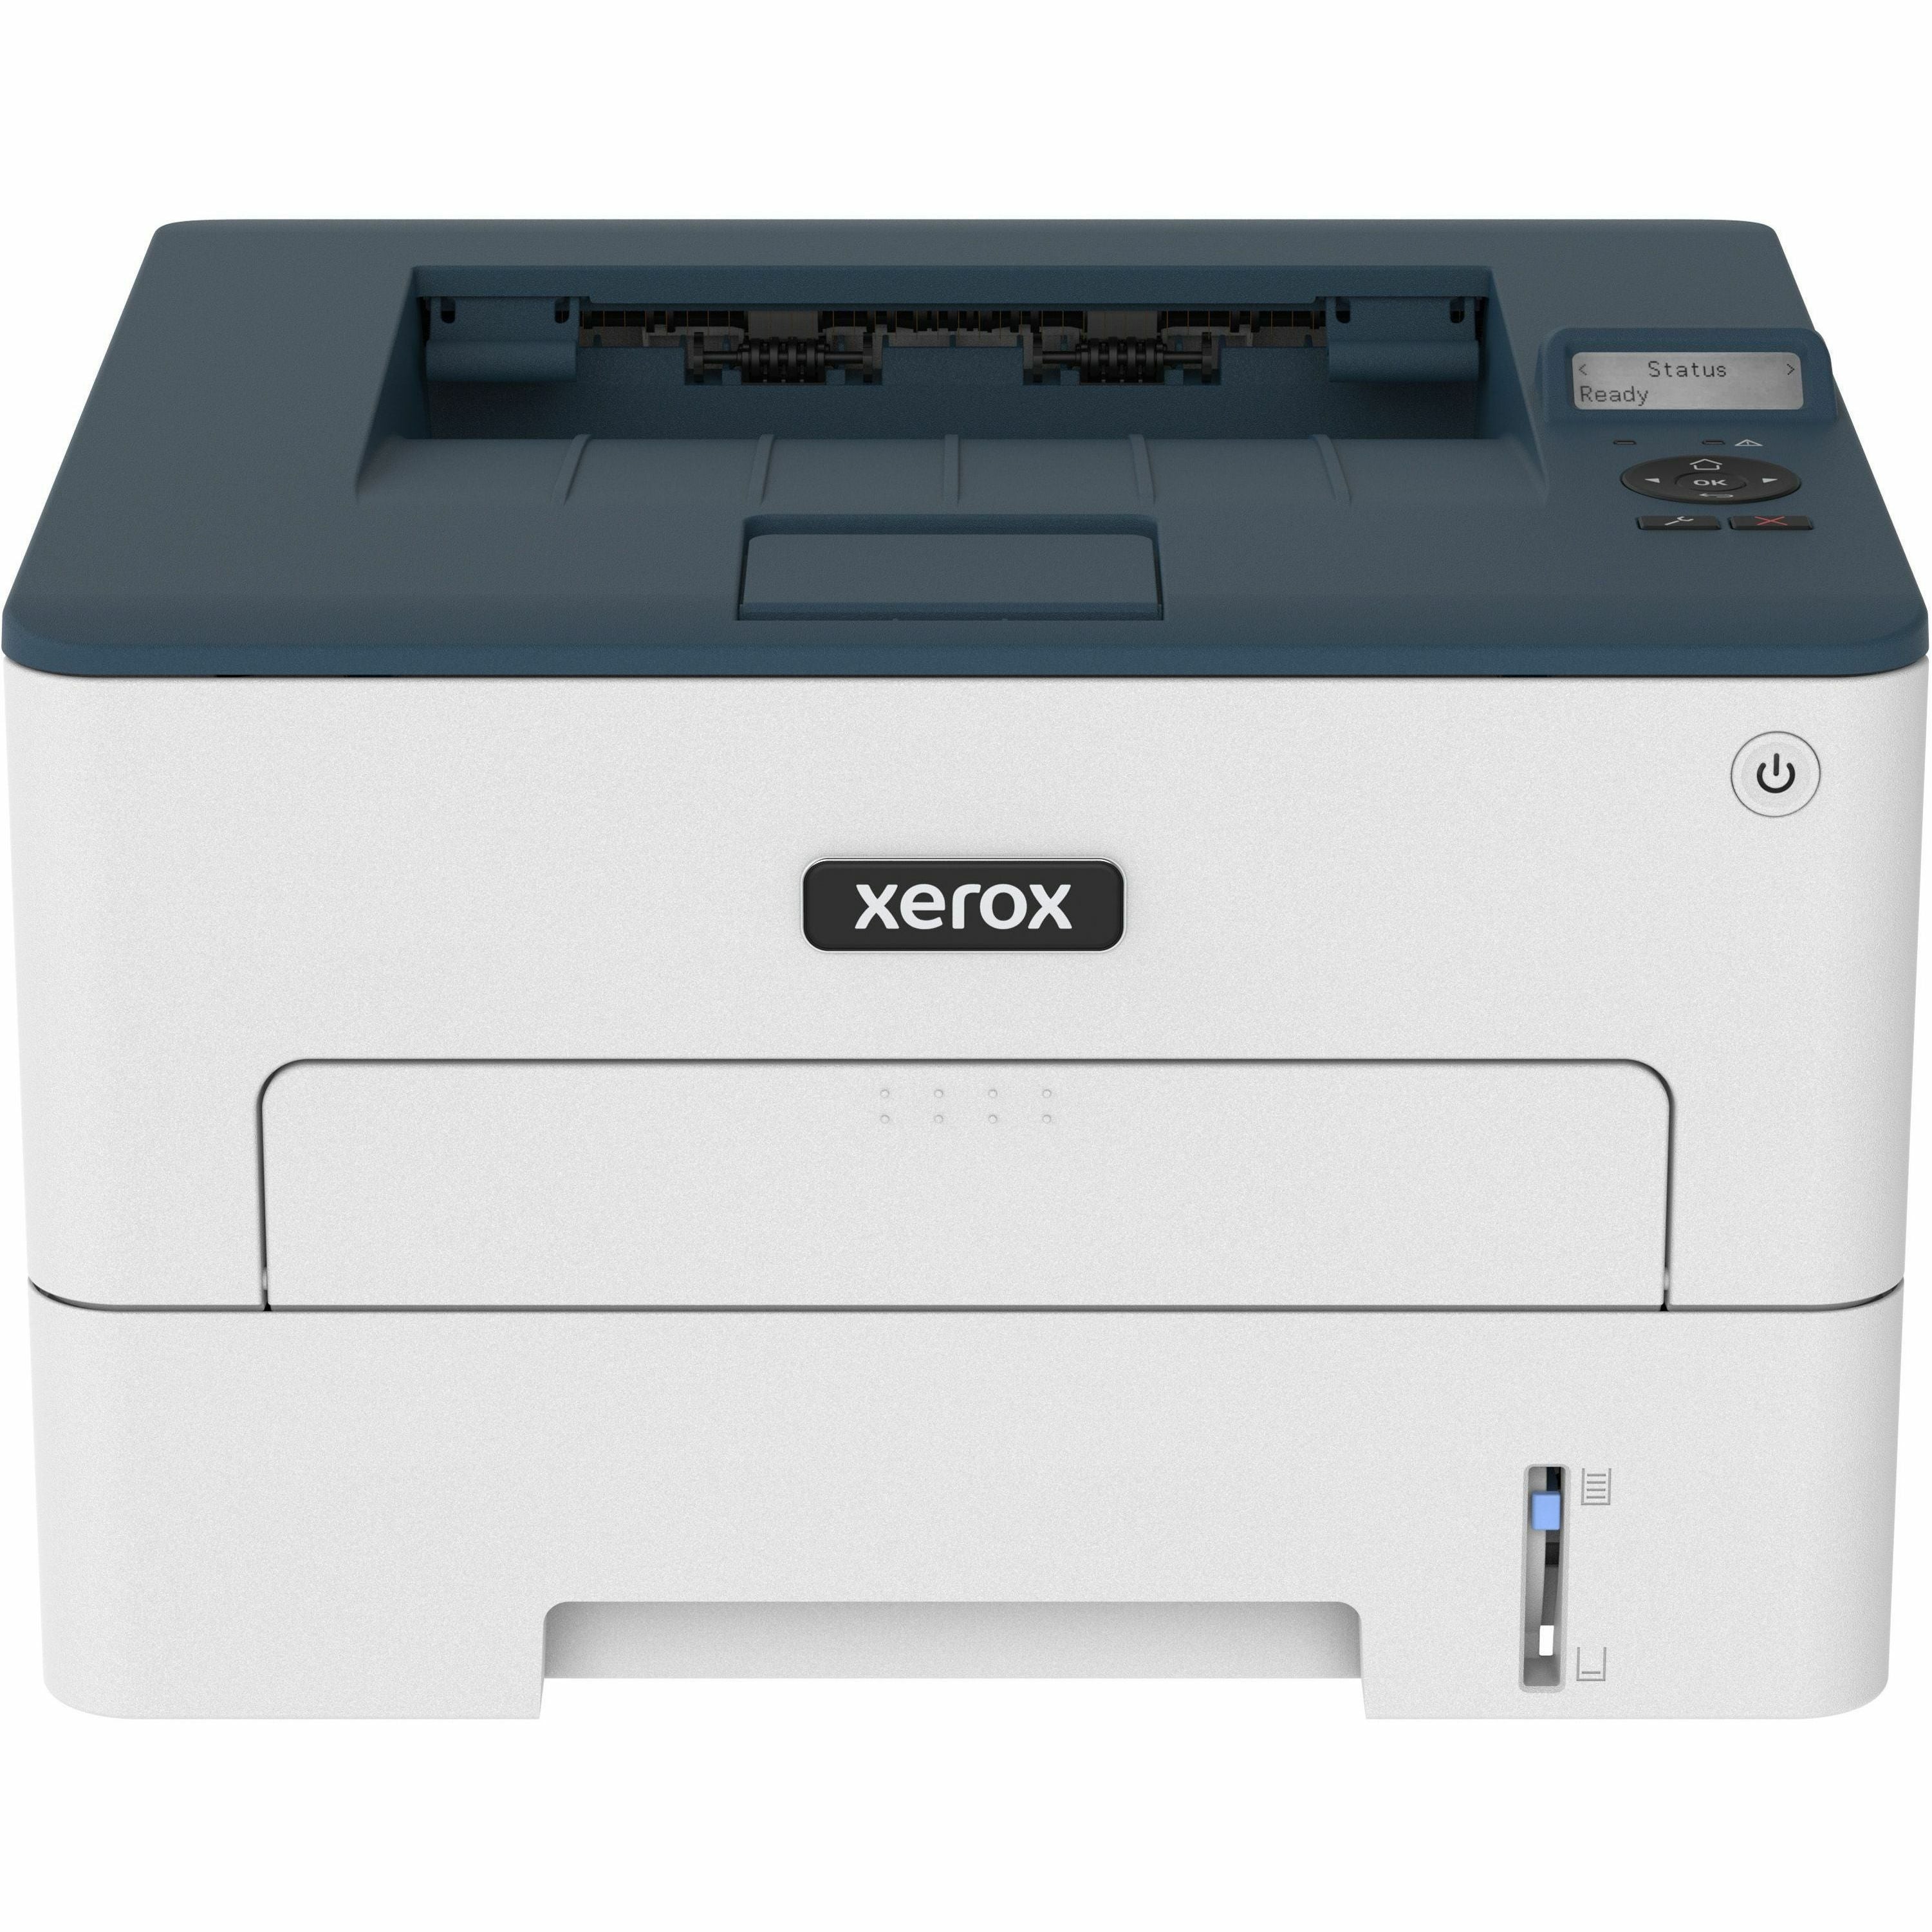 xerox-b230-dni-desktop-wireless-laser-printer-monochrome-36-ppm-mono-600-x-600-dpi-print-automatic-duplex-print-251-sheets-input-ethernet-wireless-lan-apple-airprint-mopria-print-service-chromebook-30000-pages-duty-cycle-plain-p_xerb230dni - 2